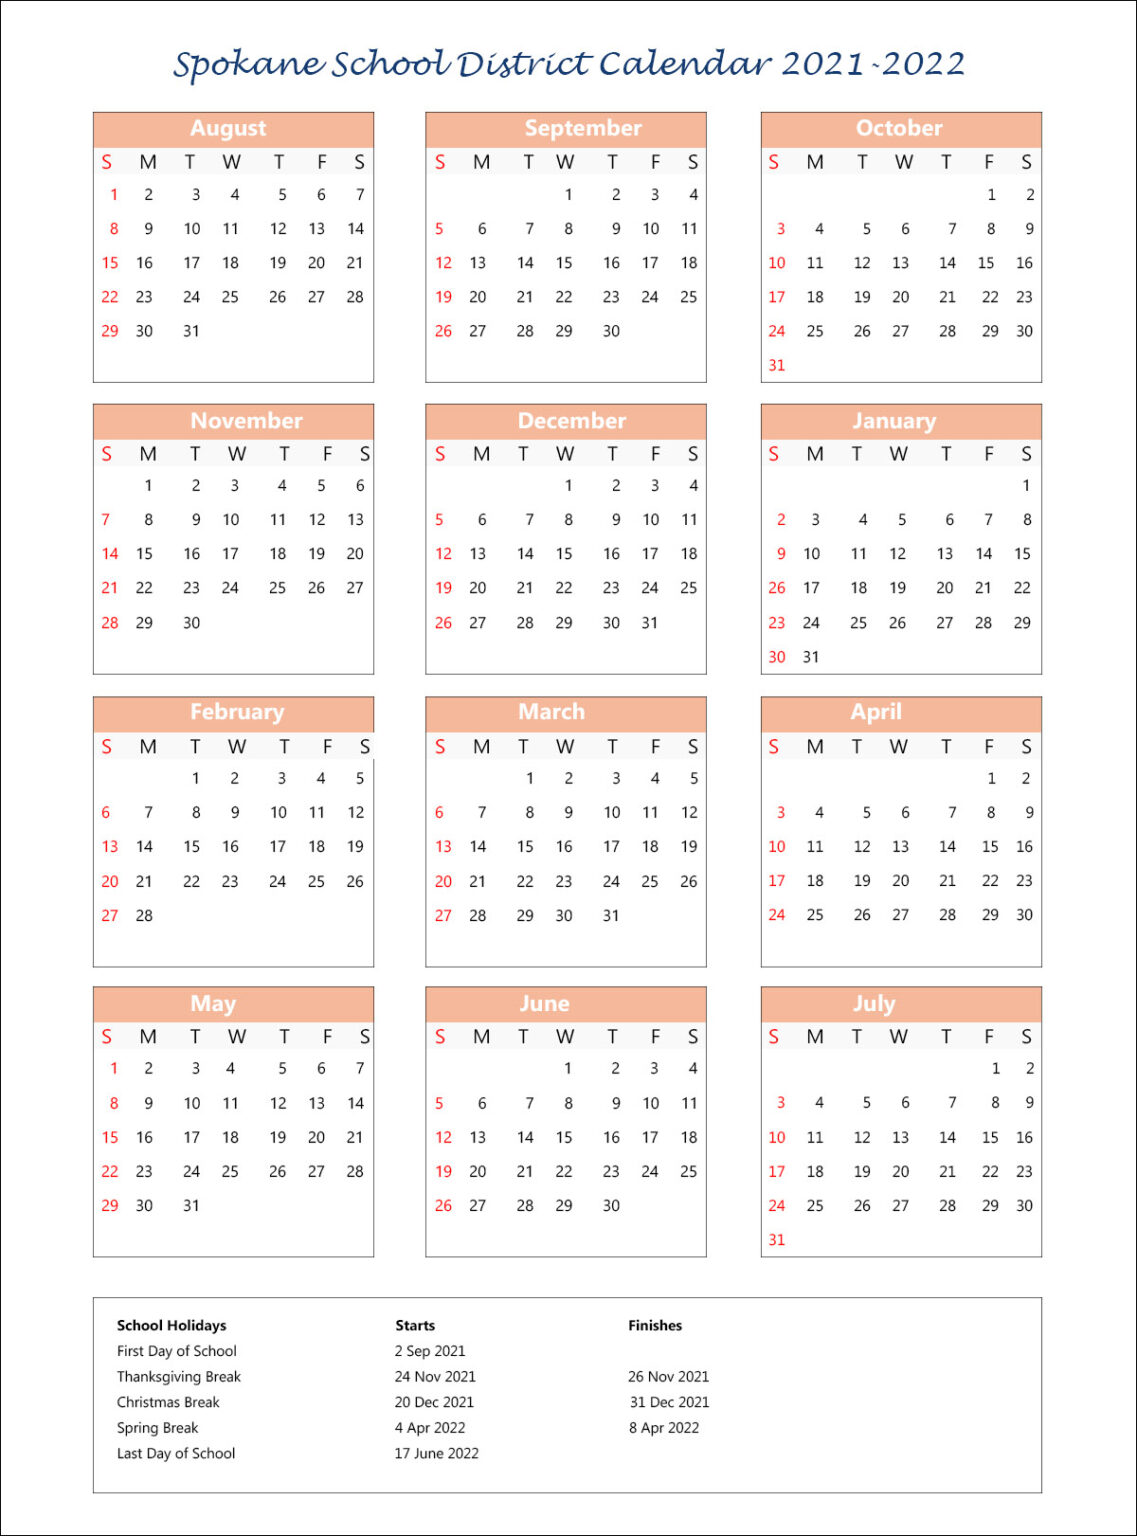 Spokane School District Calendar Holidays 2021-2022